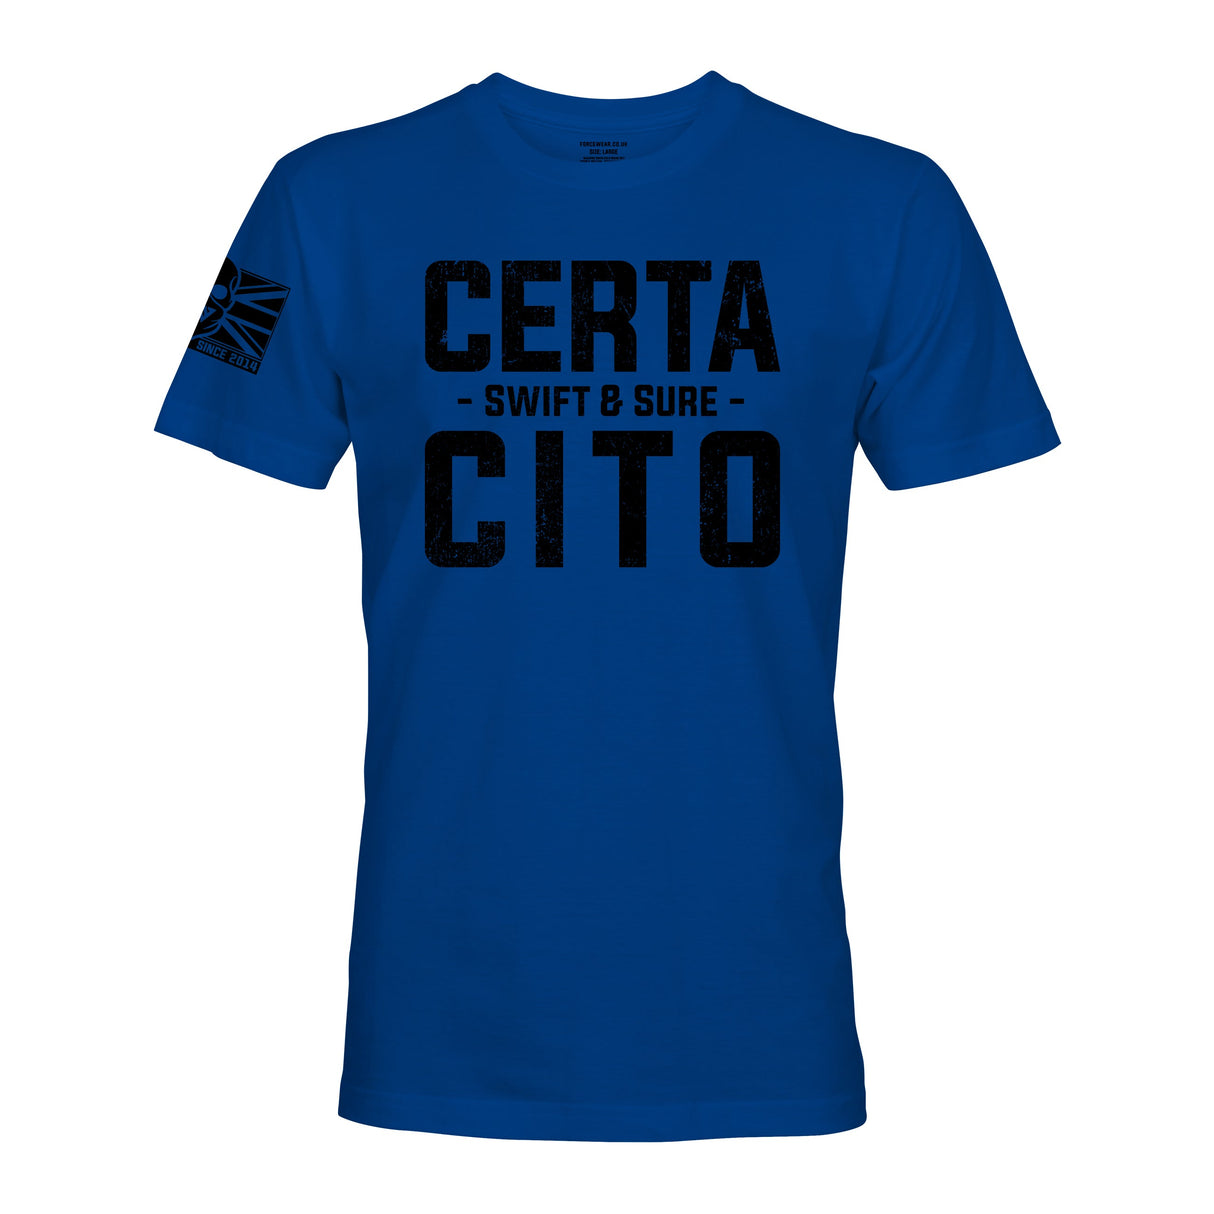 CERTA CITO (SIGNALS) - Force Wear HQ - T-SHIRTS